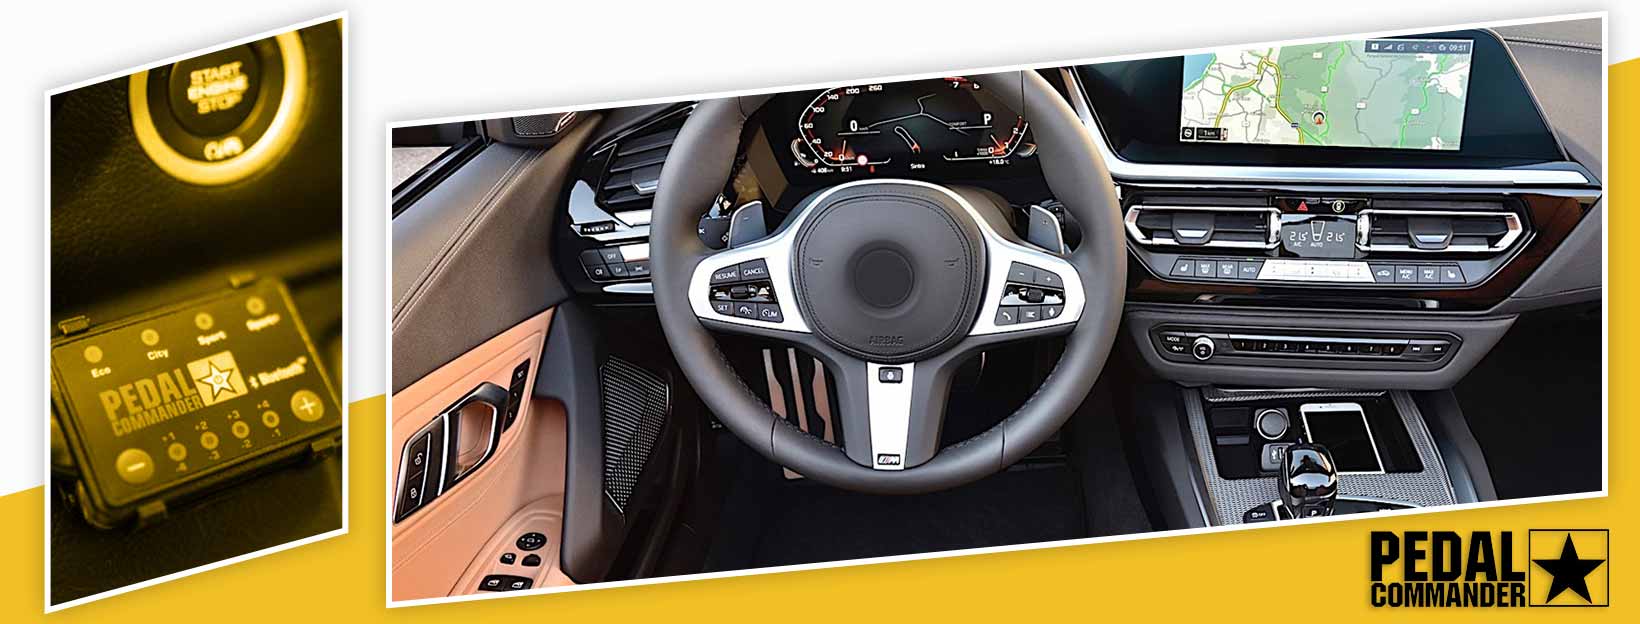 Pedal Commander for BMW Z4 - interior